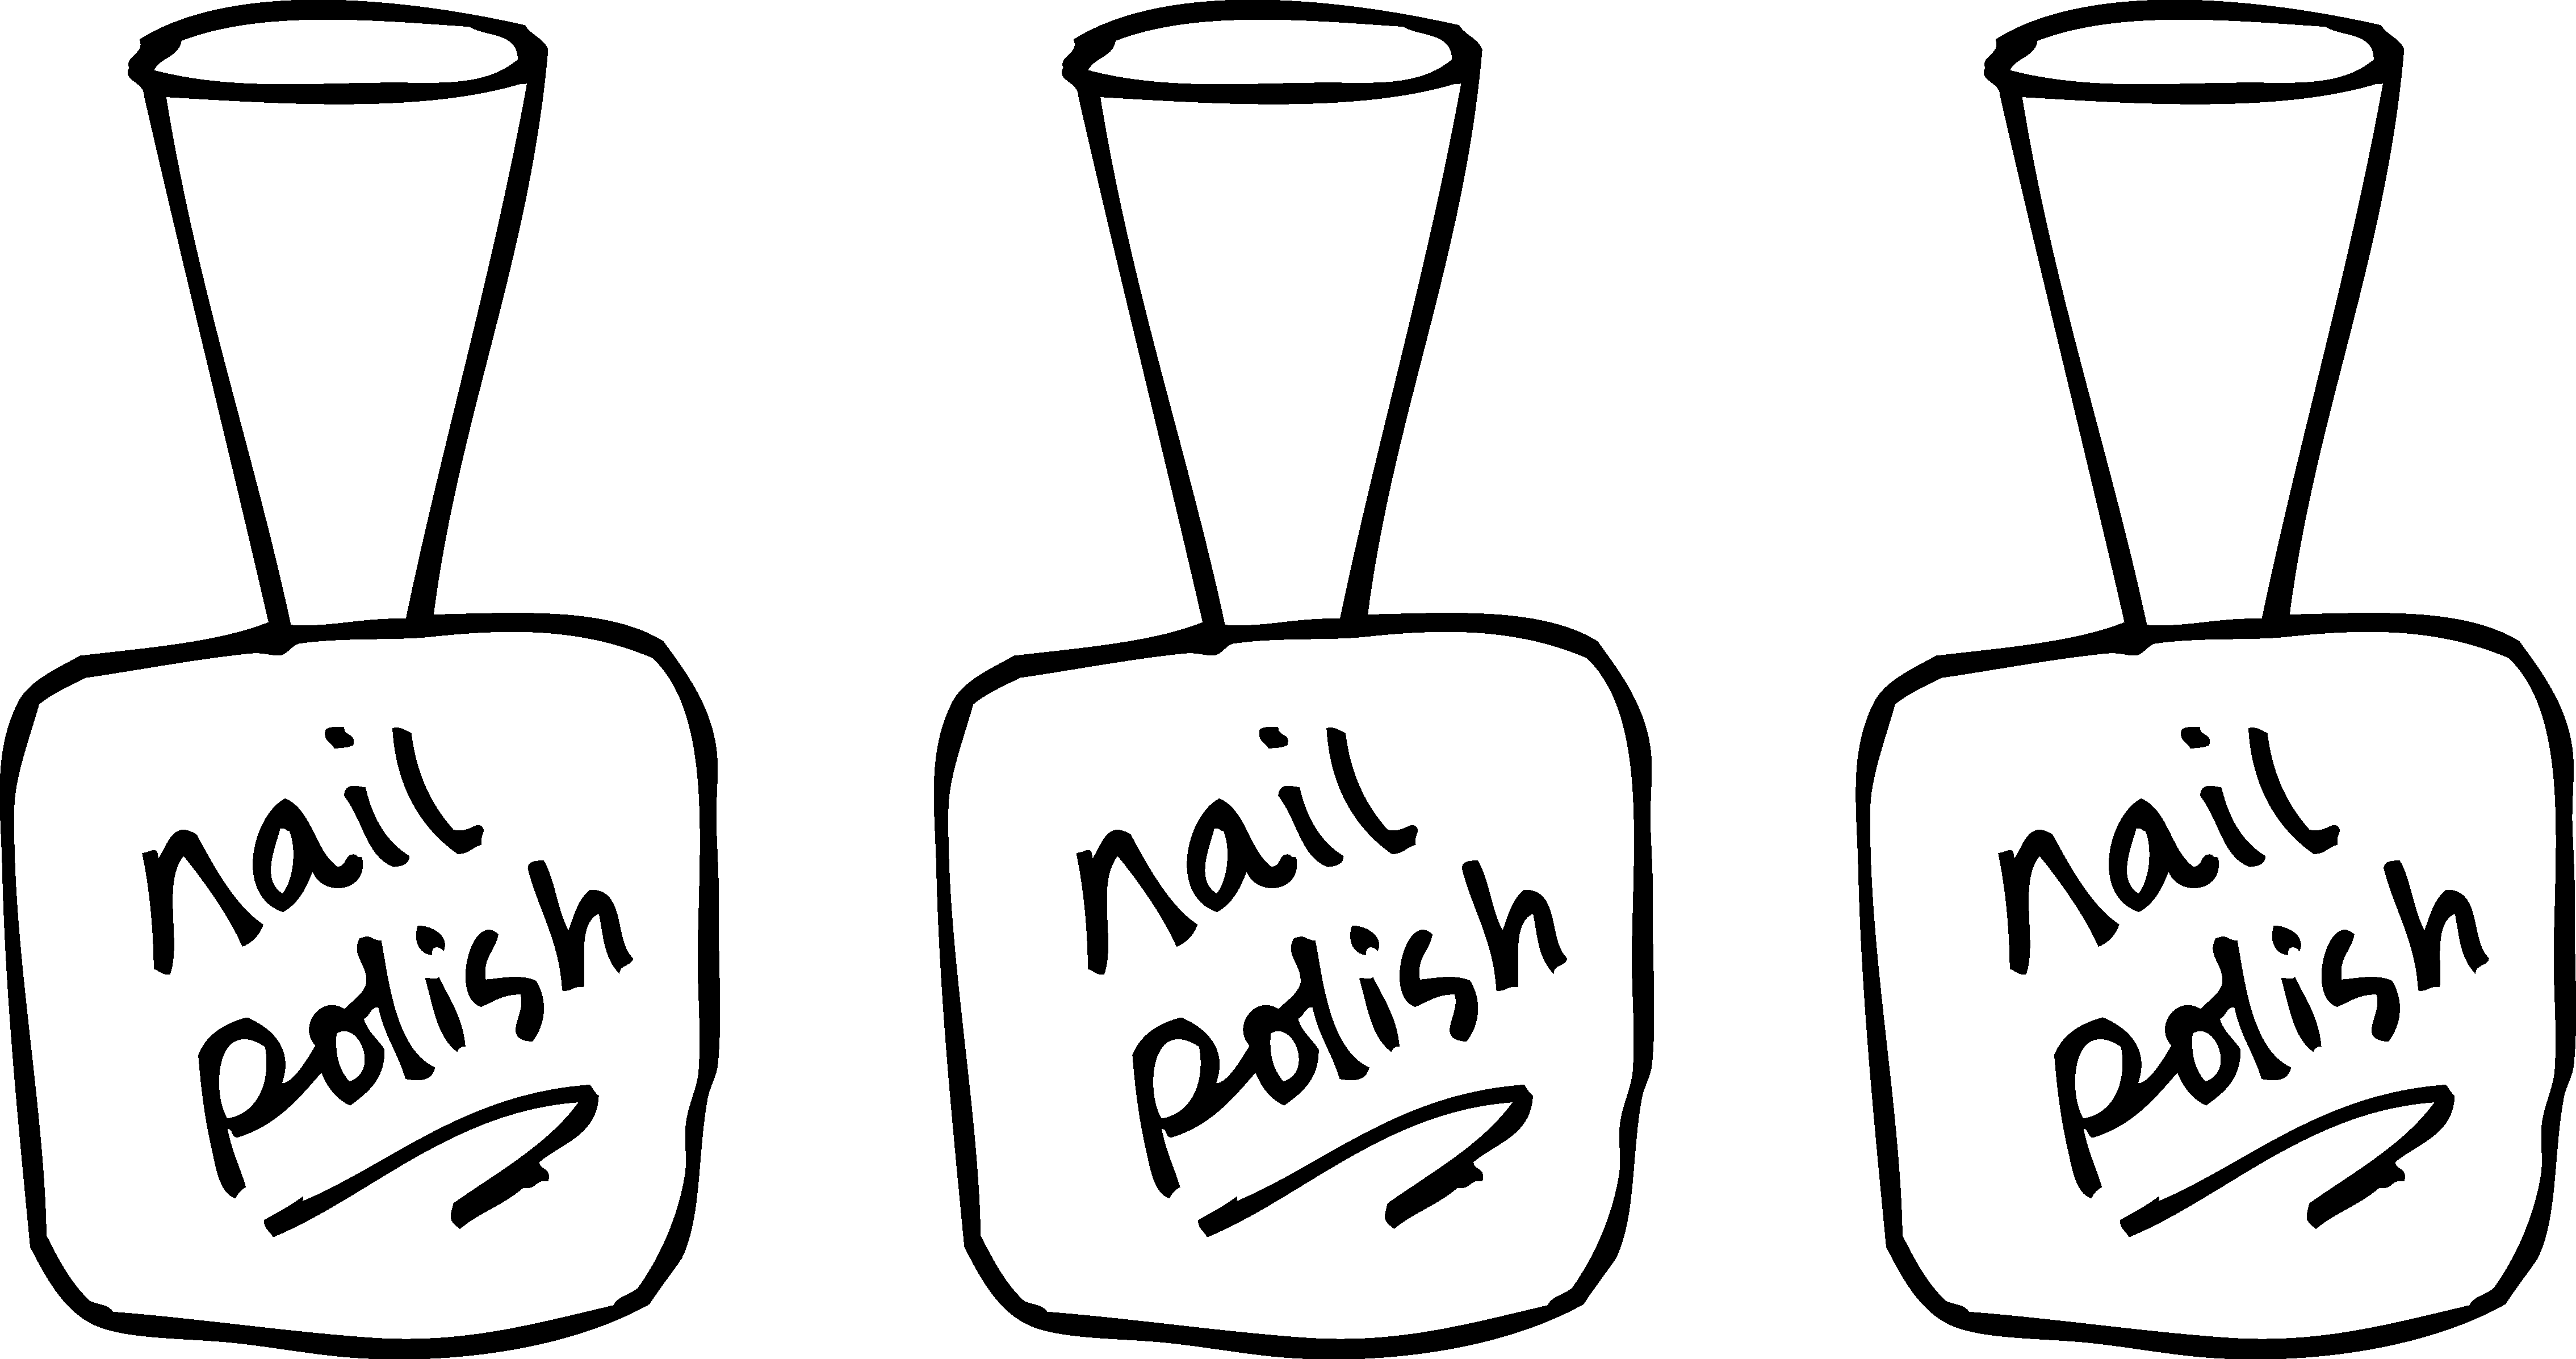 1. Nail polish bottle design - wide 1